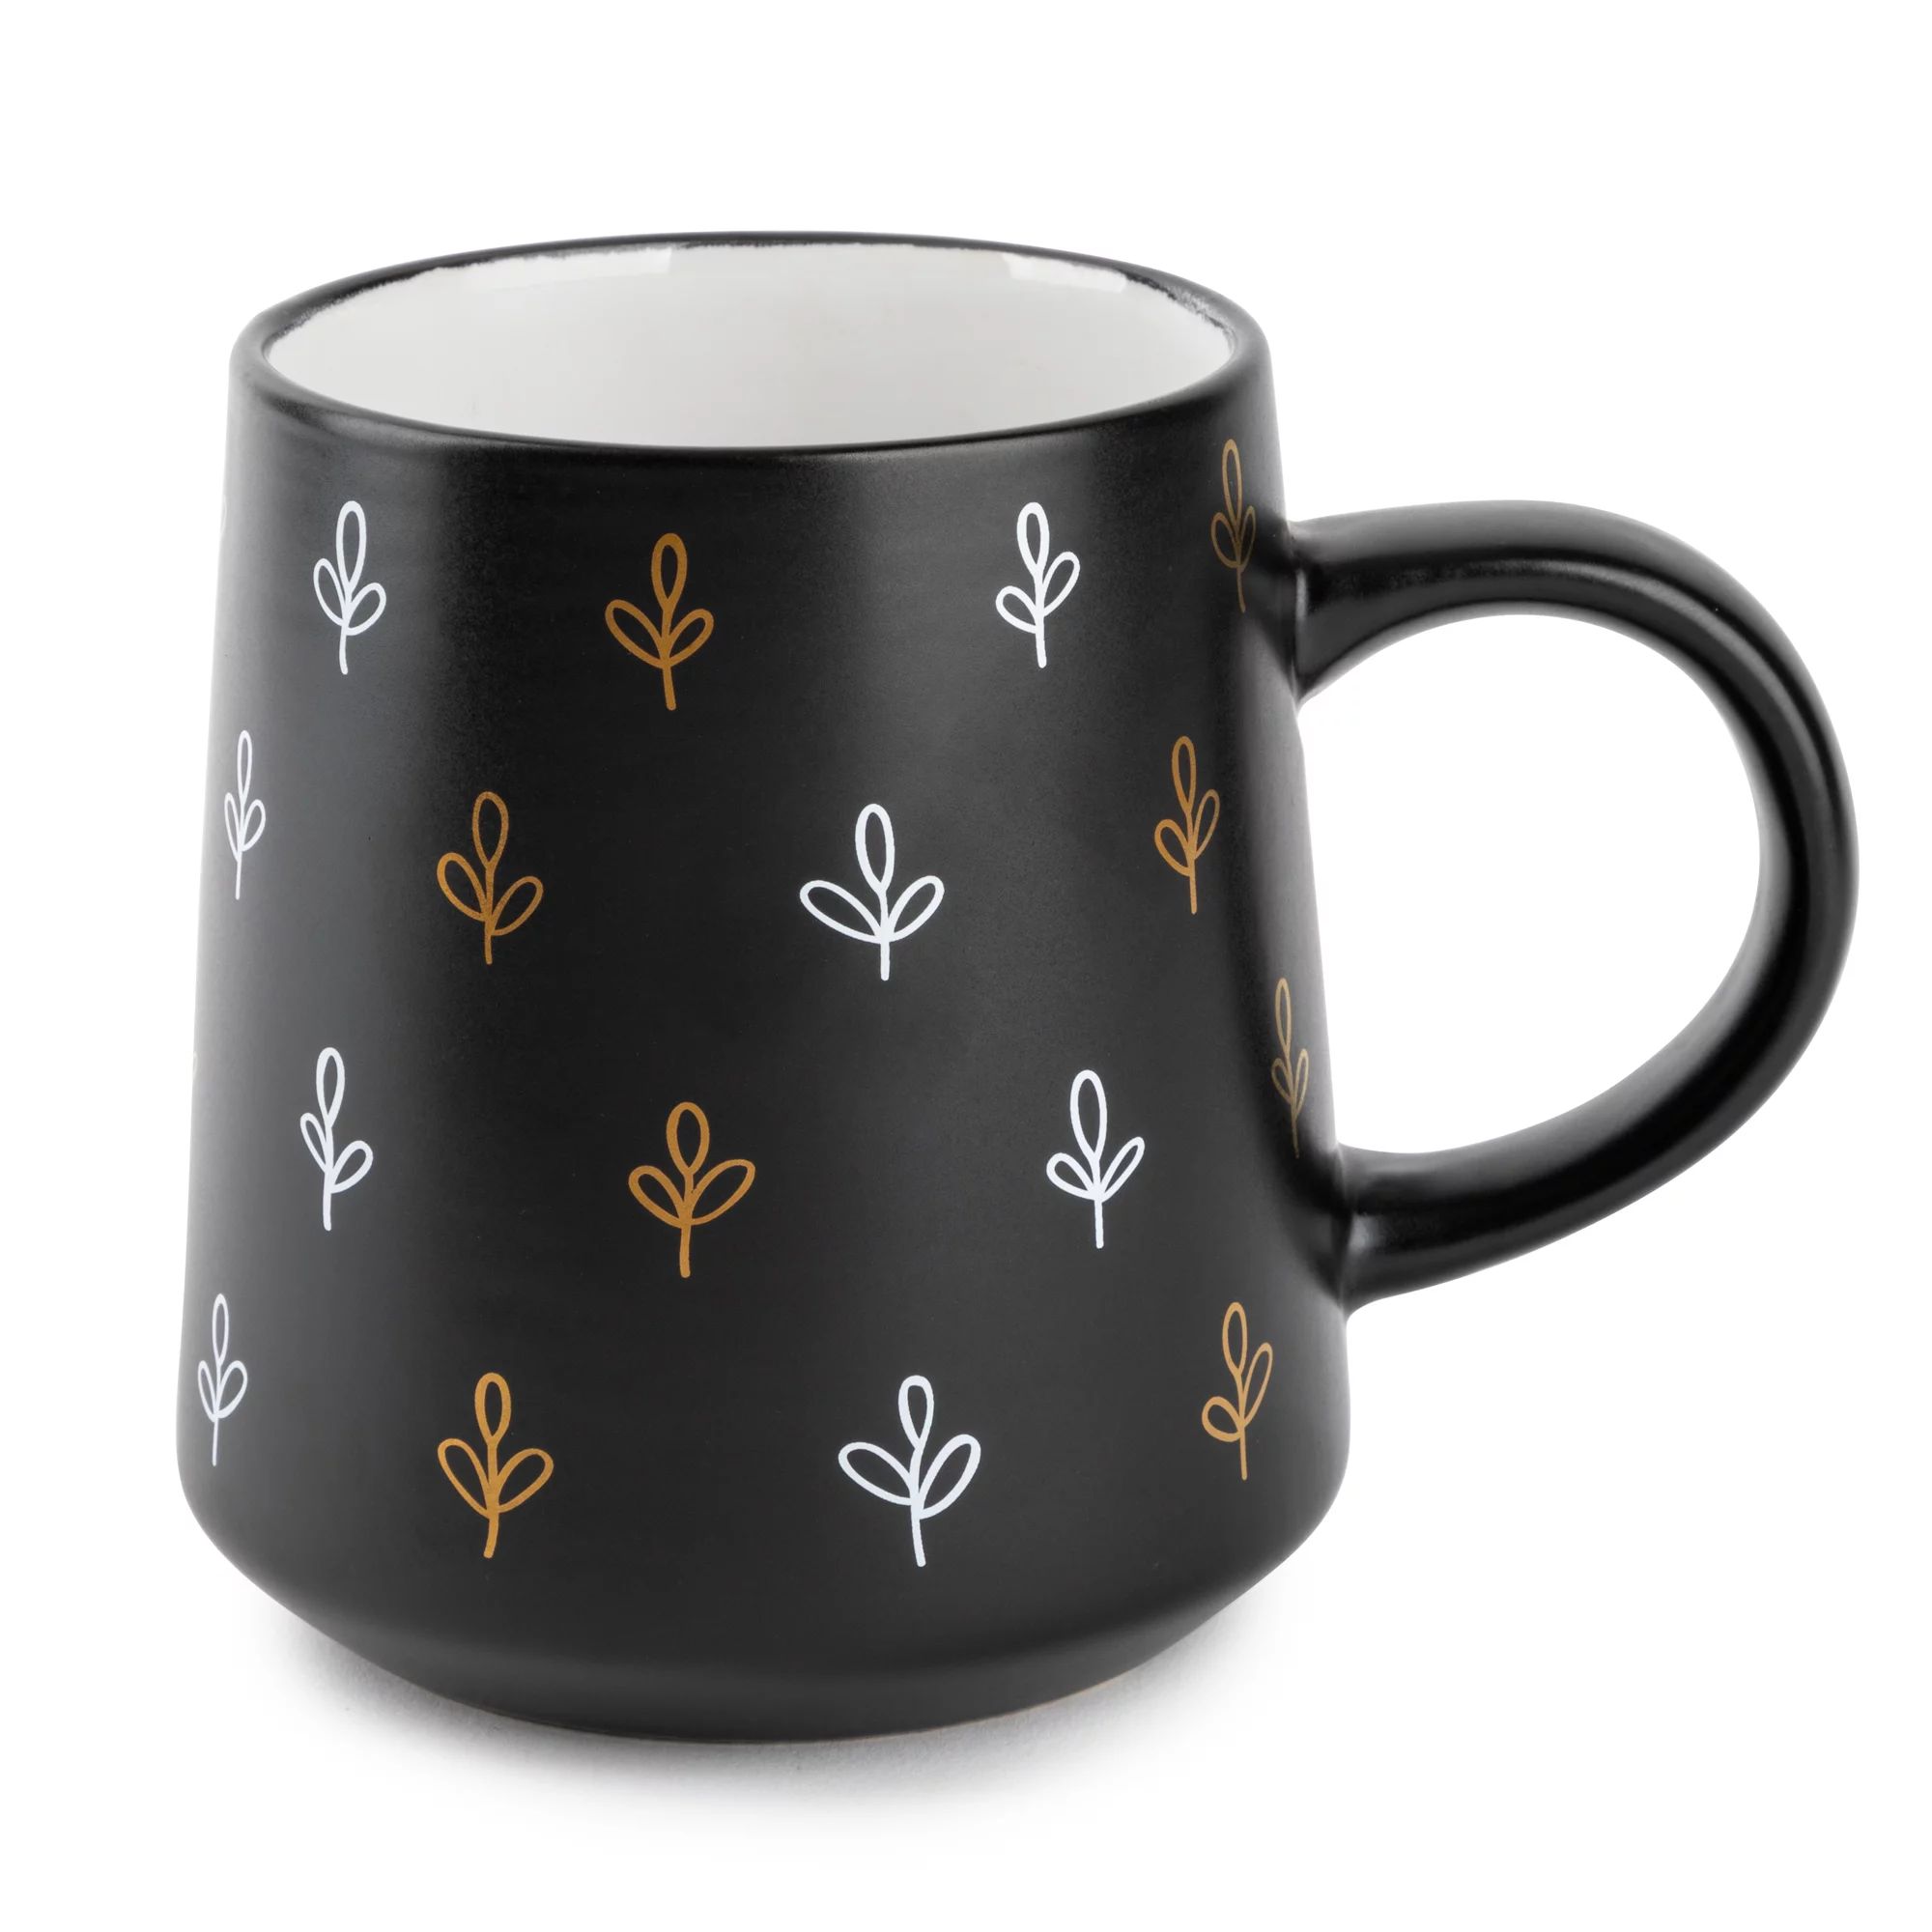 Thyme & Table Stoneware Coffee Mug, 16 fl oz, Black Leaf | Walmart (US)